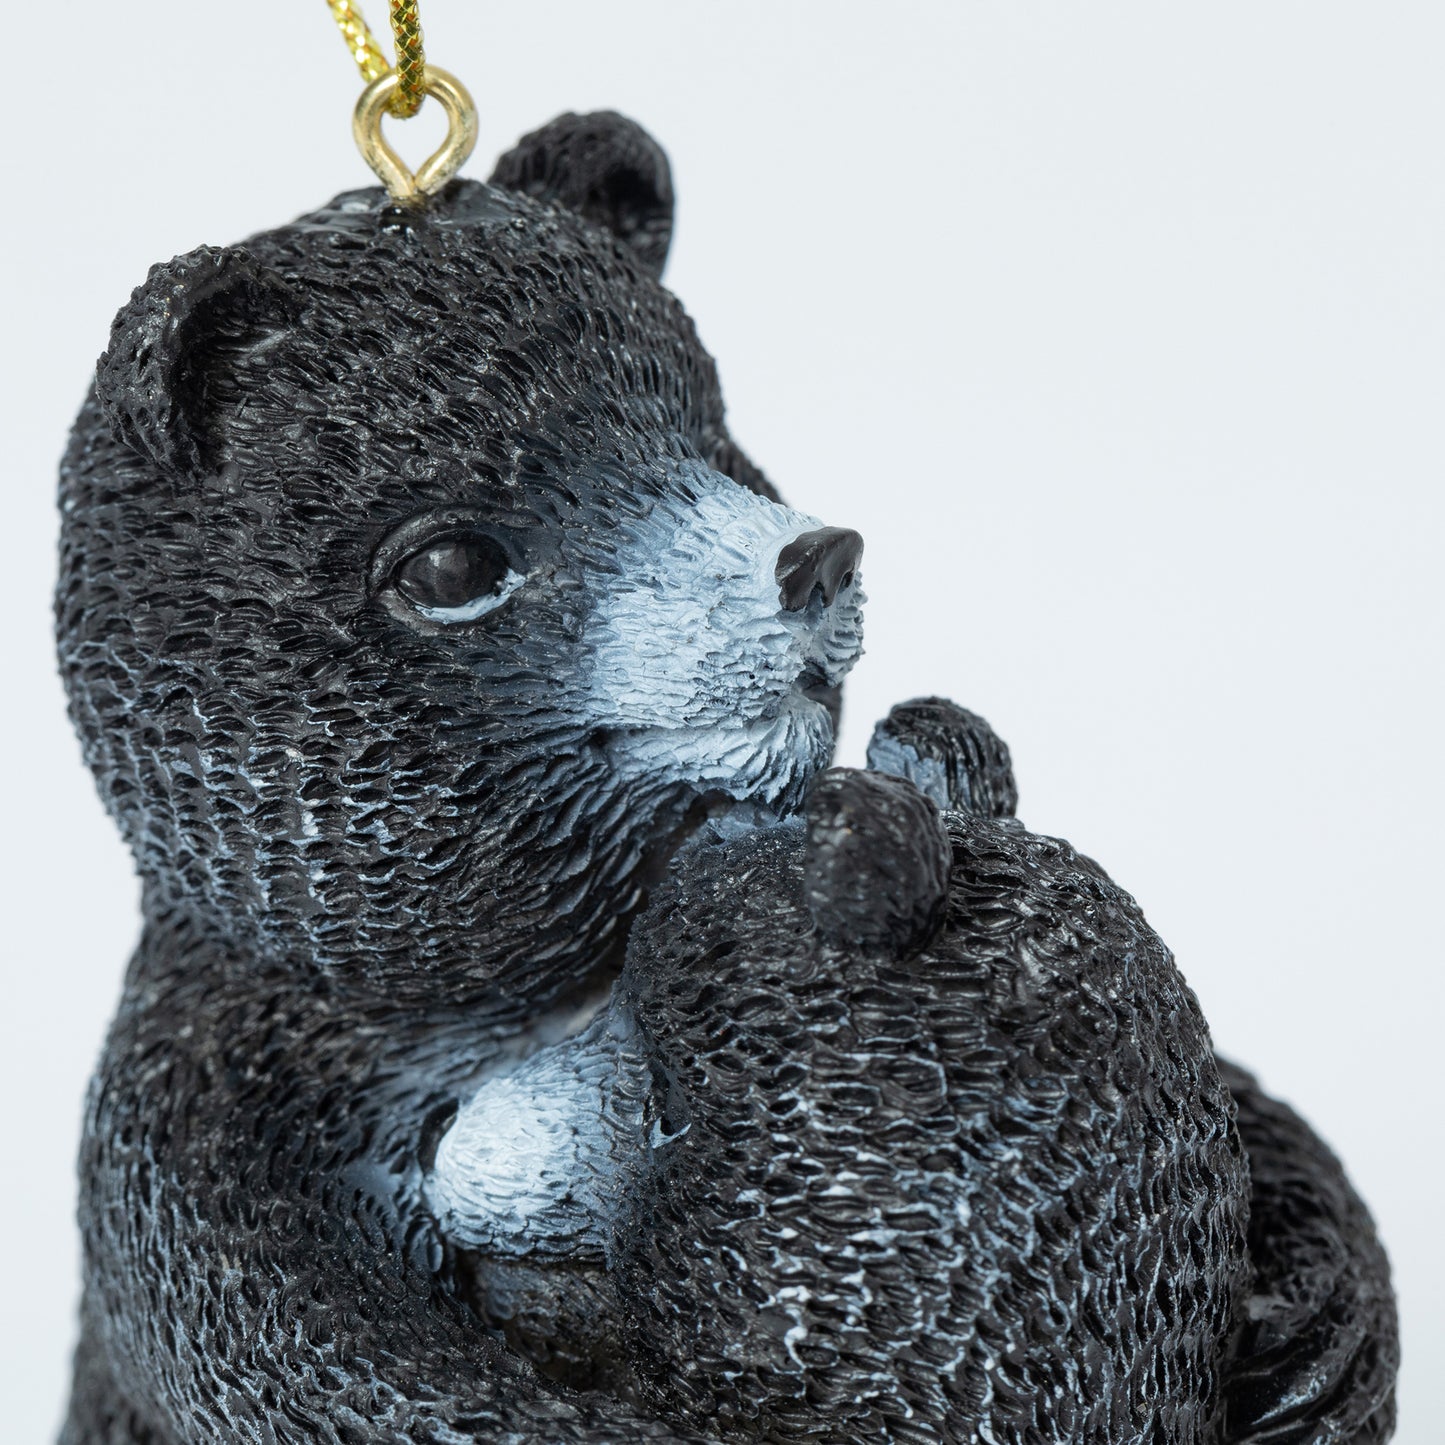 Bear Hug Ornament